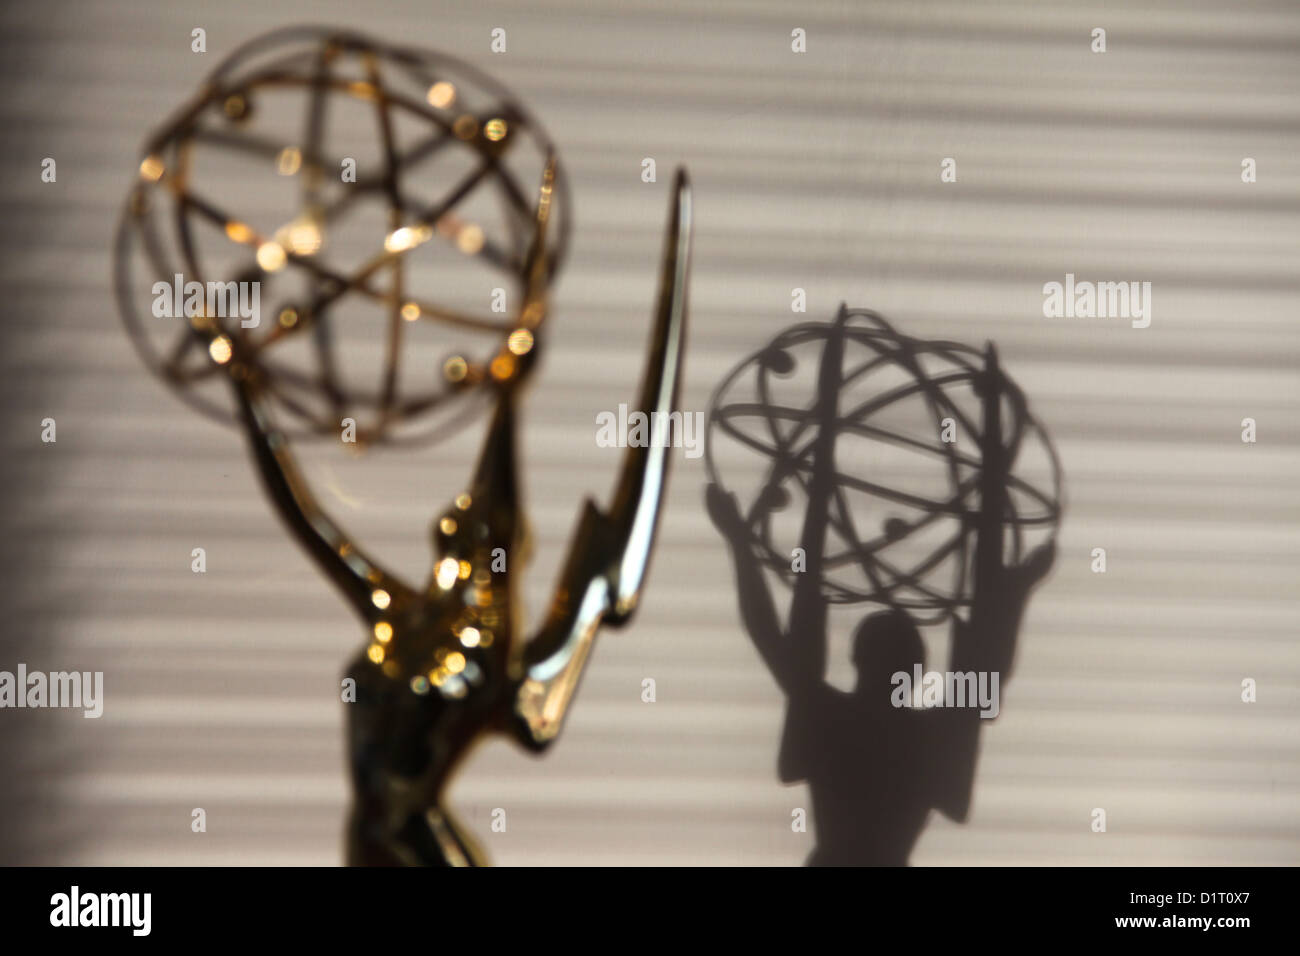 An Emmy award Stock Photo